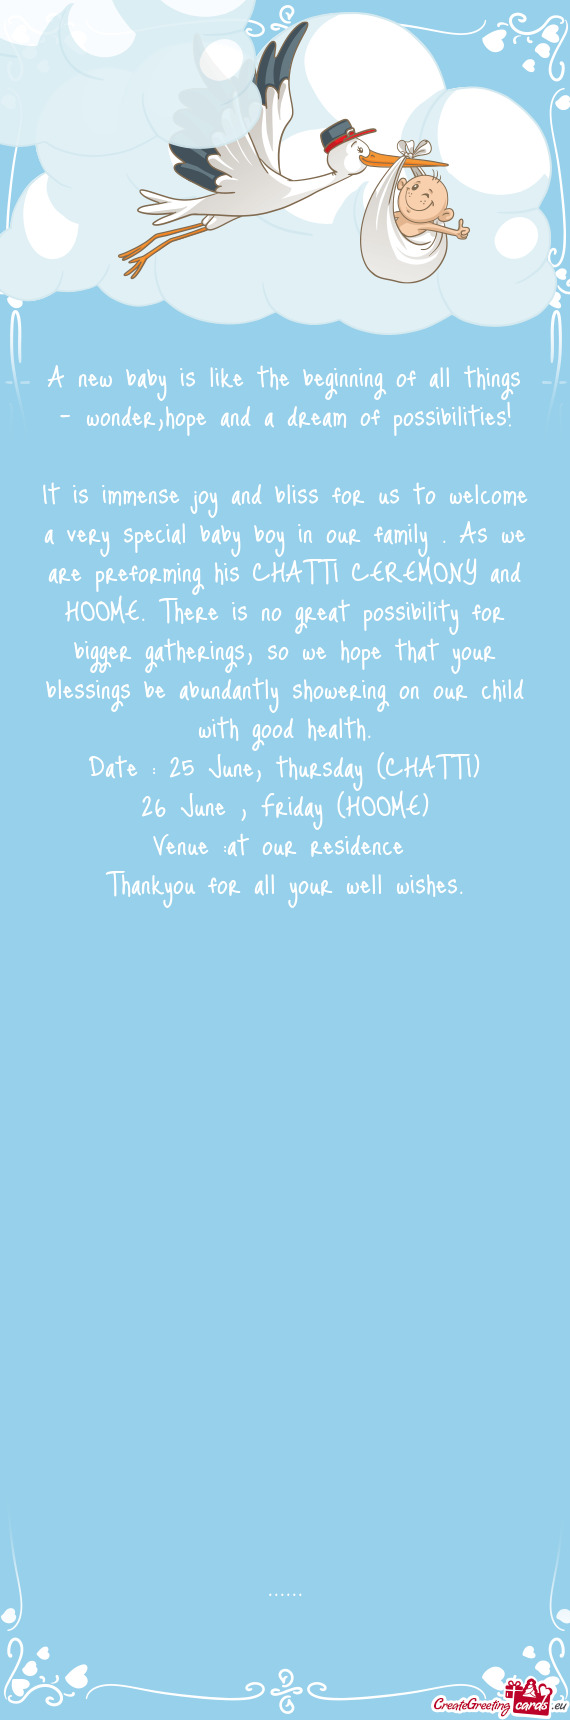 Date : 25 June, thursday (CHATTI)